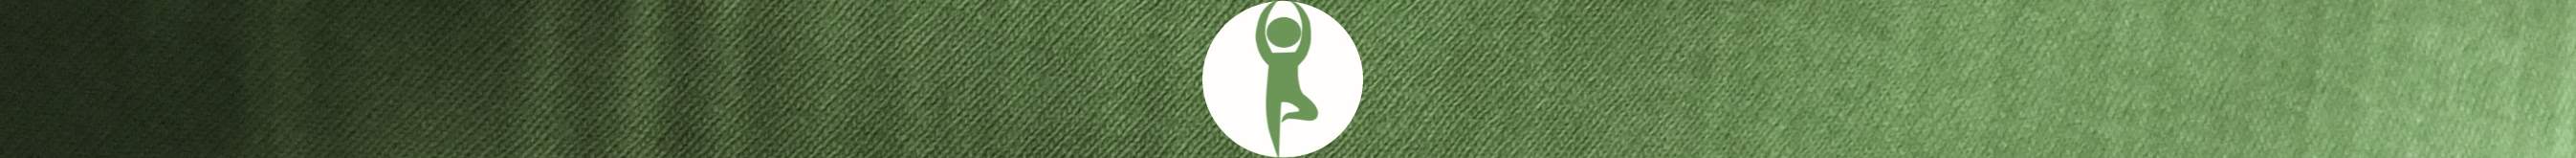 gr-stof balk yoga+logo